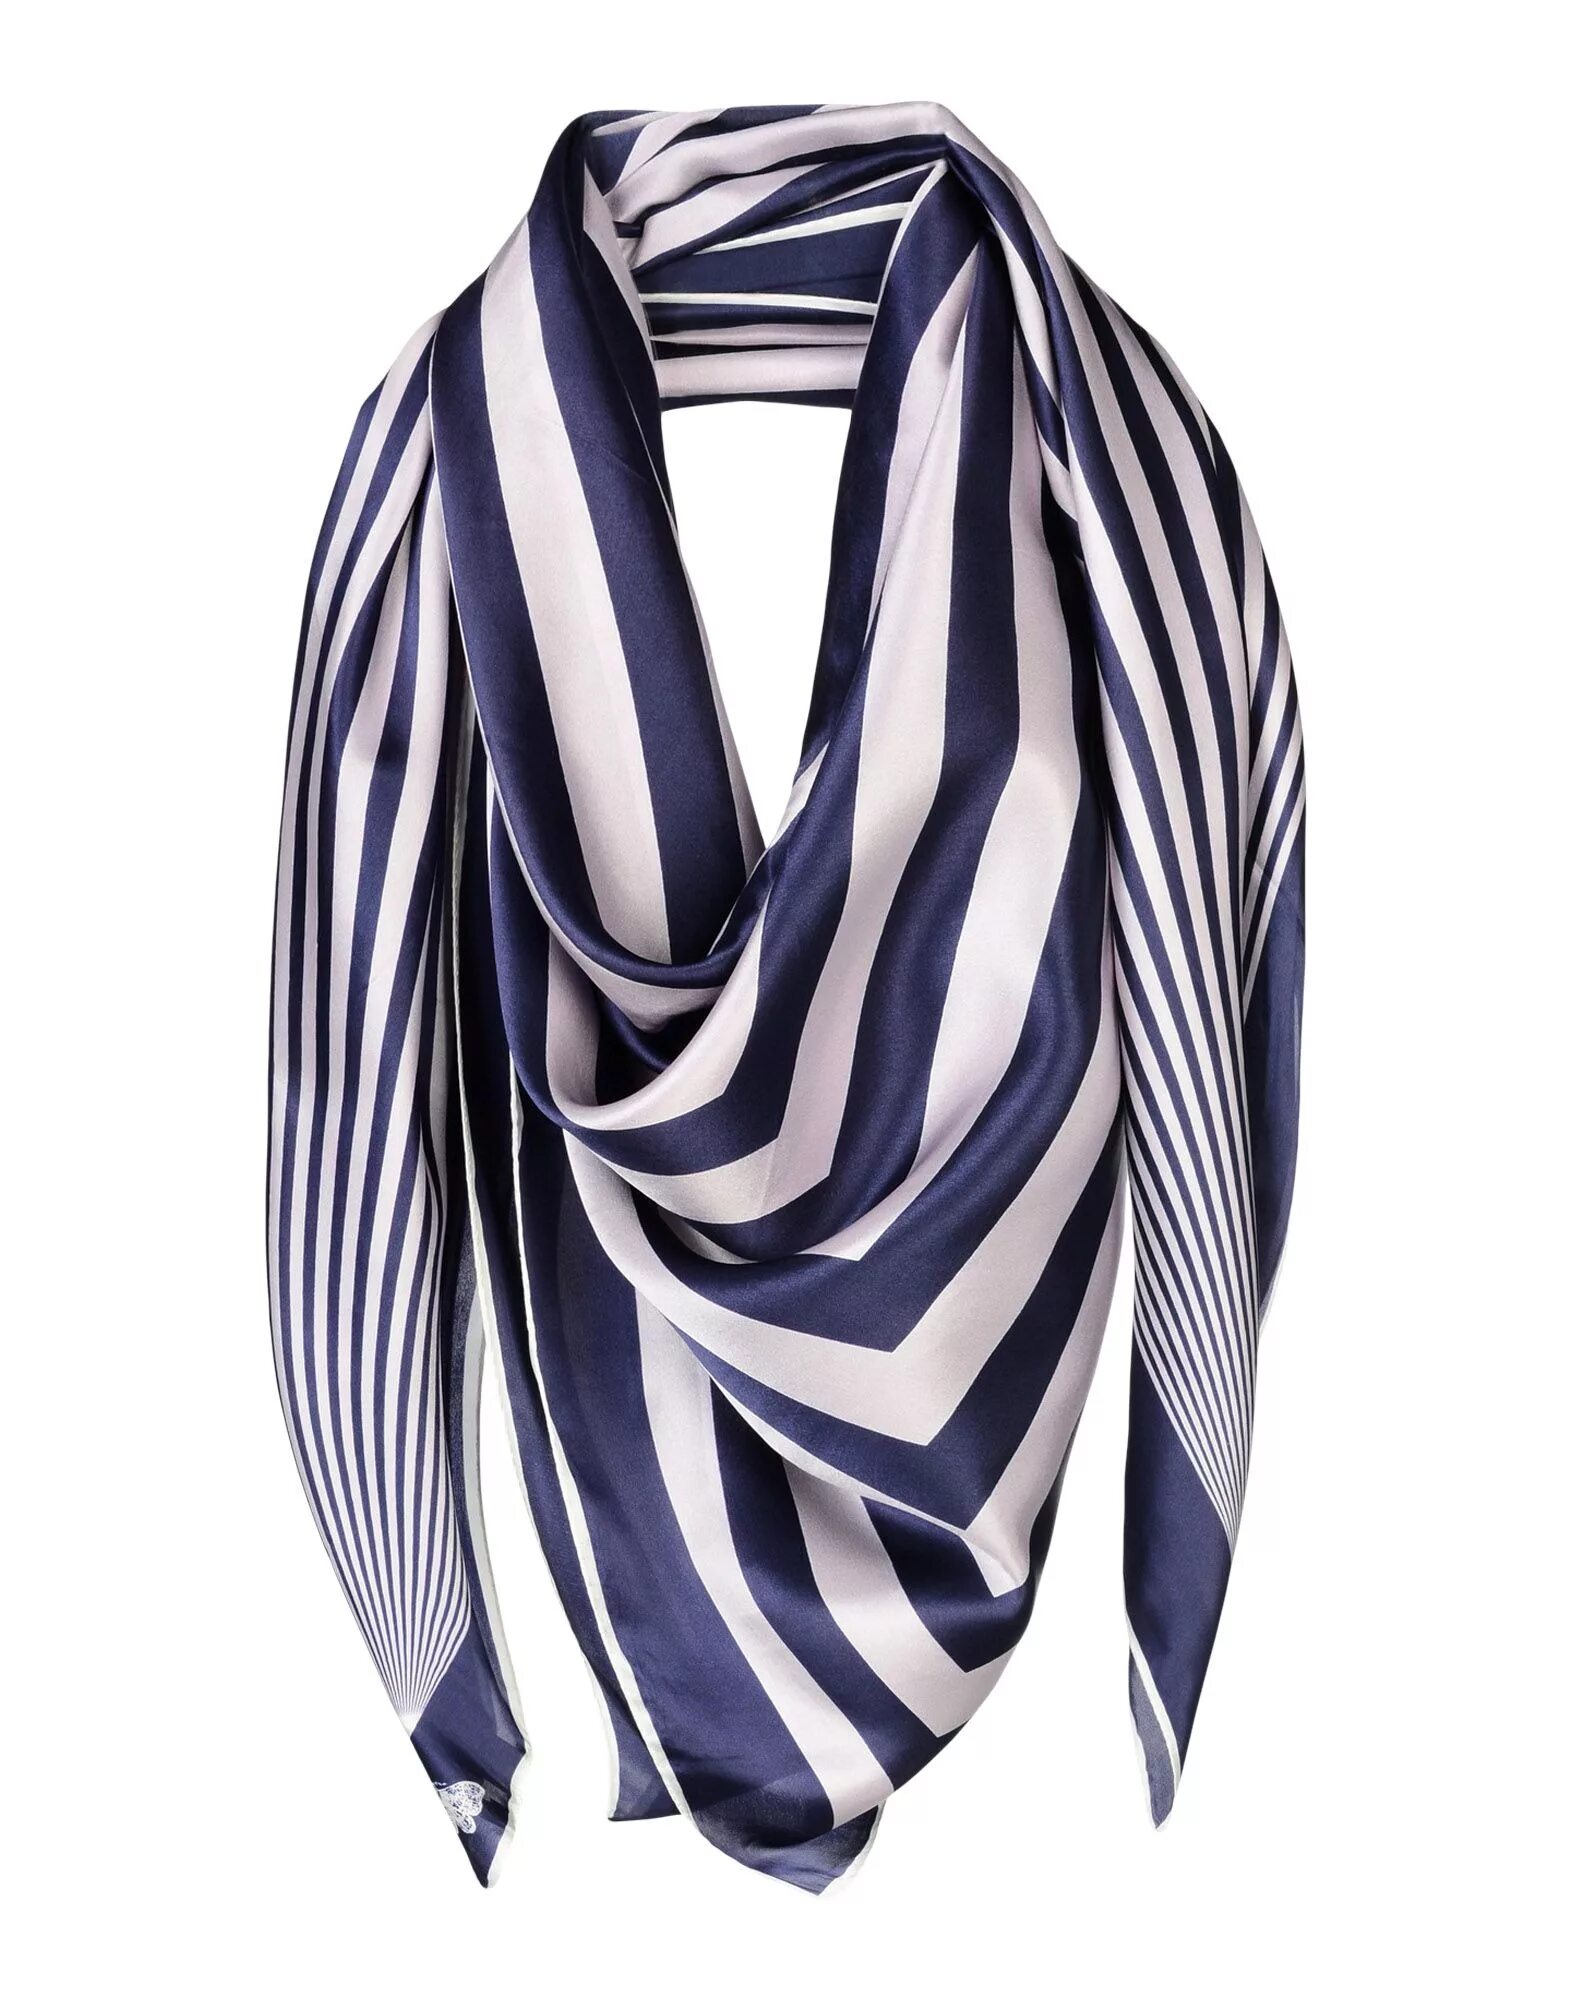 Платок полоска. Roberto Cavalli Scarves платок. Шарф в полоску женский. Полосатый шарф. Полосатый платок.